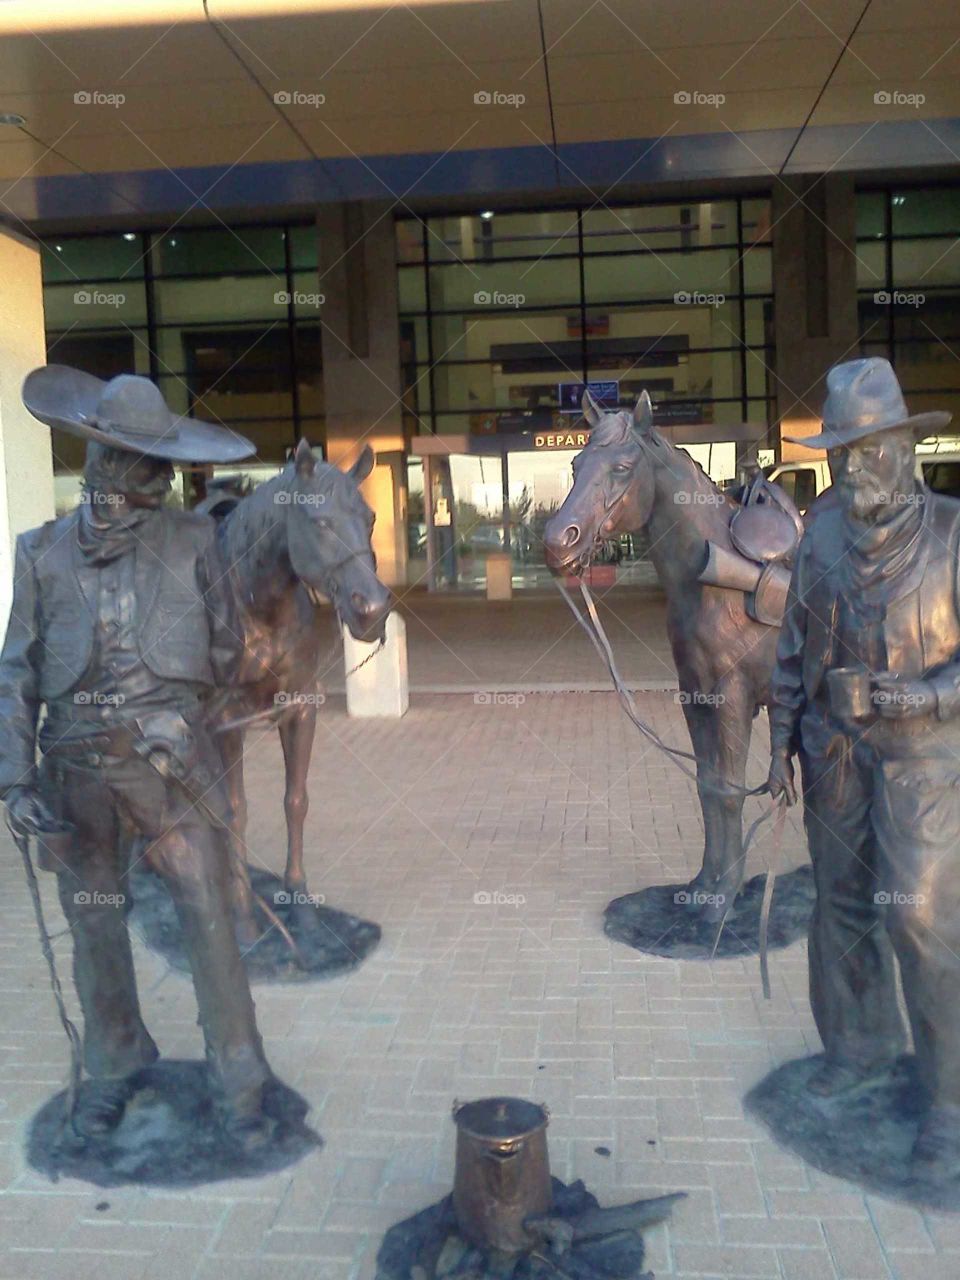 Cowboy statues